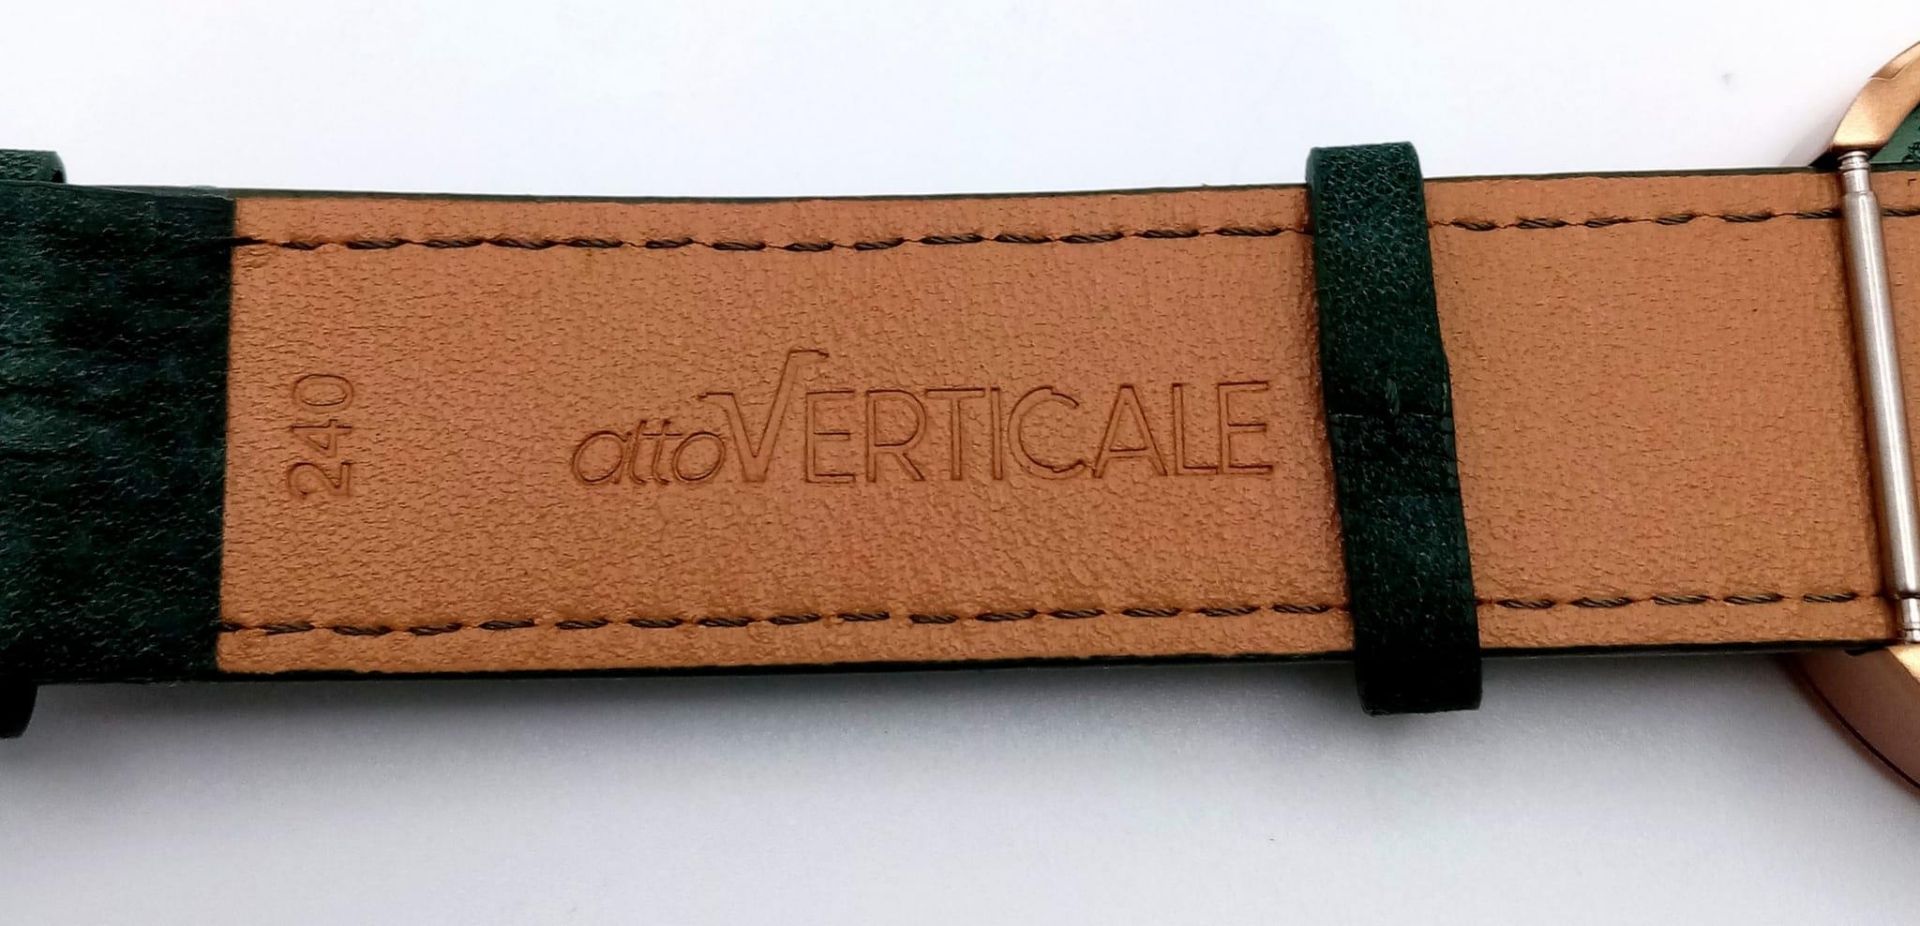 A Verticale Mechanical Top Winder Gents Watch. Green leather strap. Gold tone ceramic gilded - Bild 5 aus 7